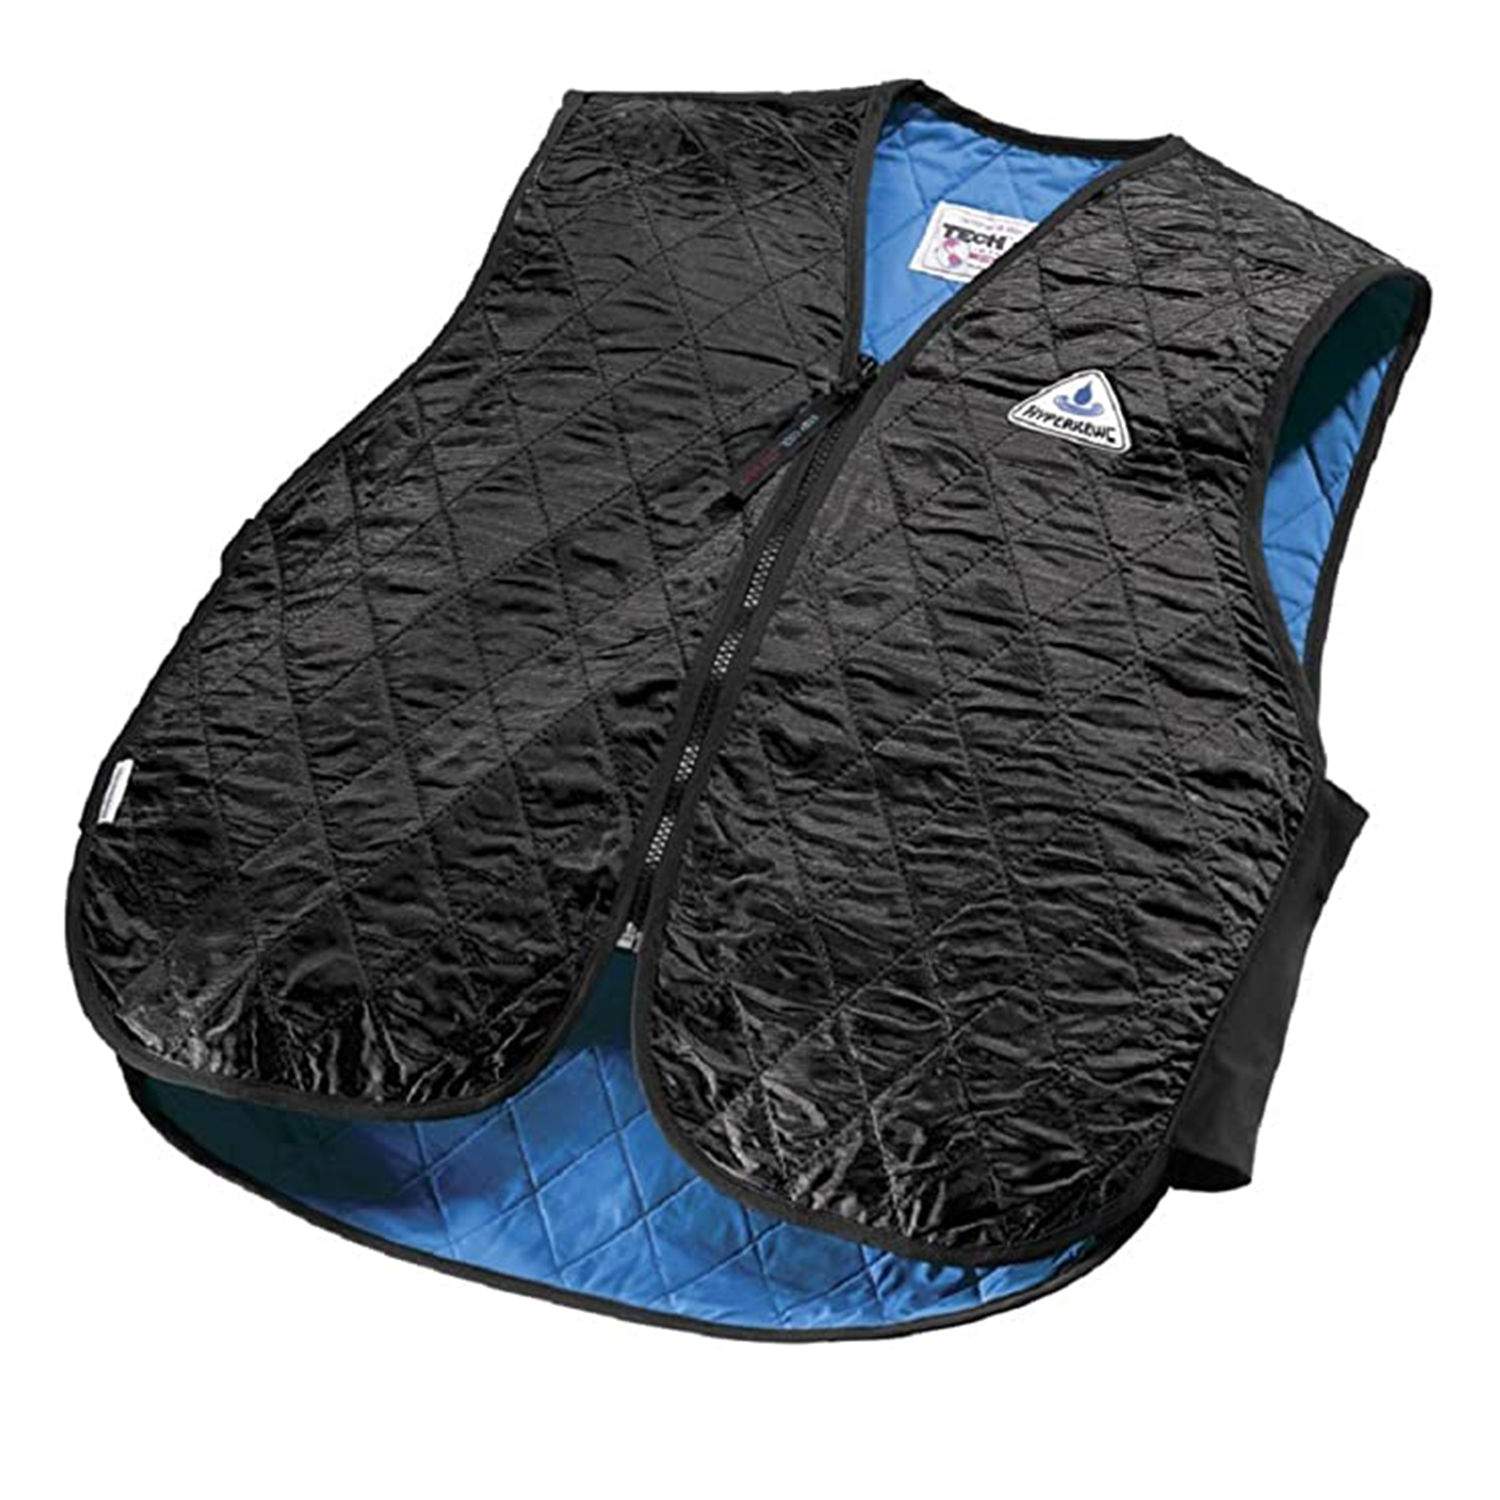 Techniche HyperKewl Evaporative Cooling Child Sport Vest